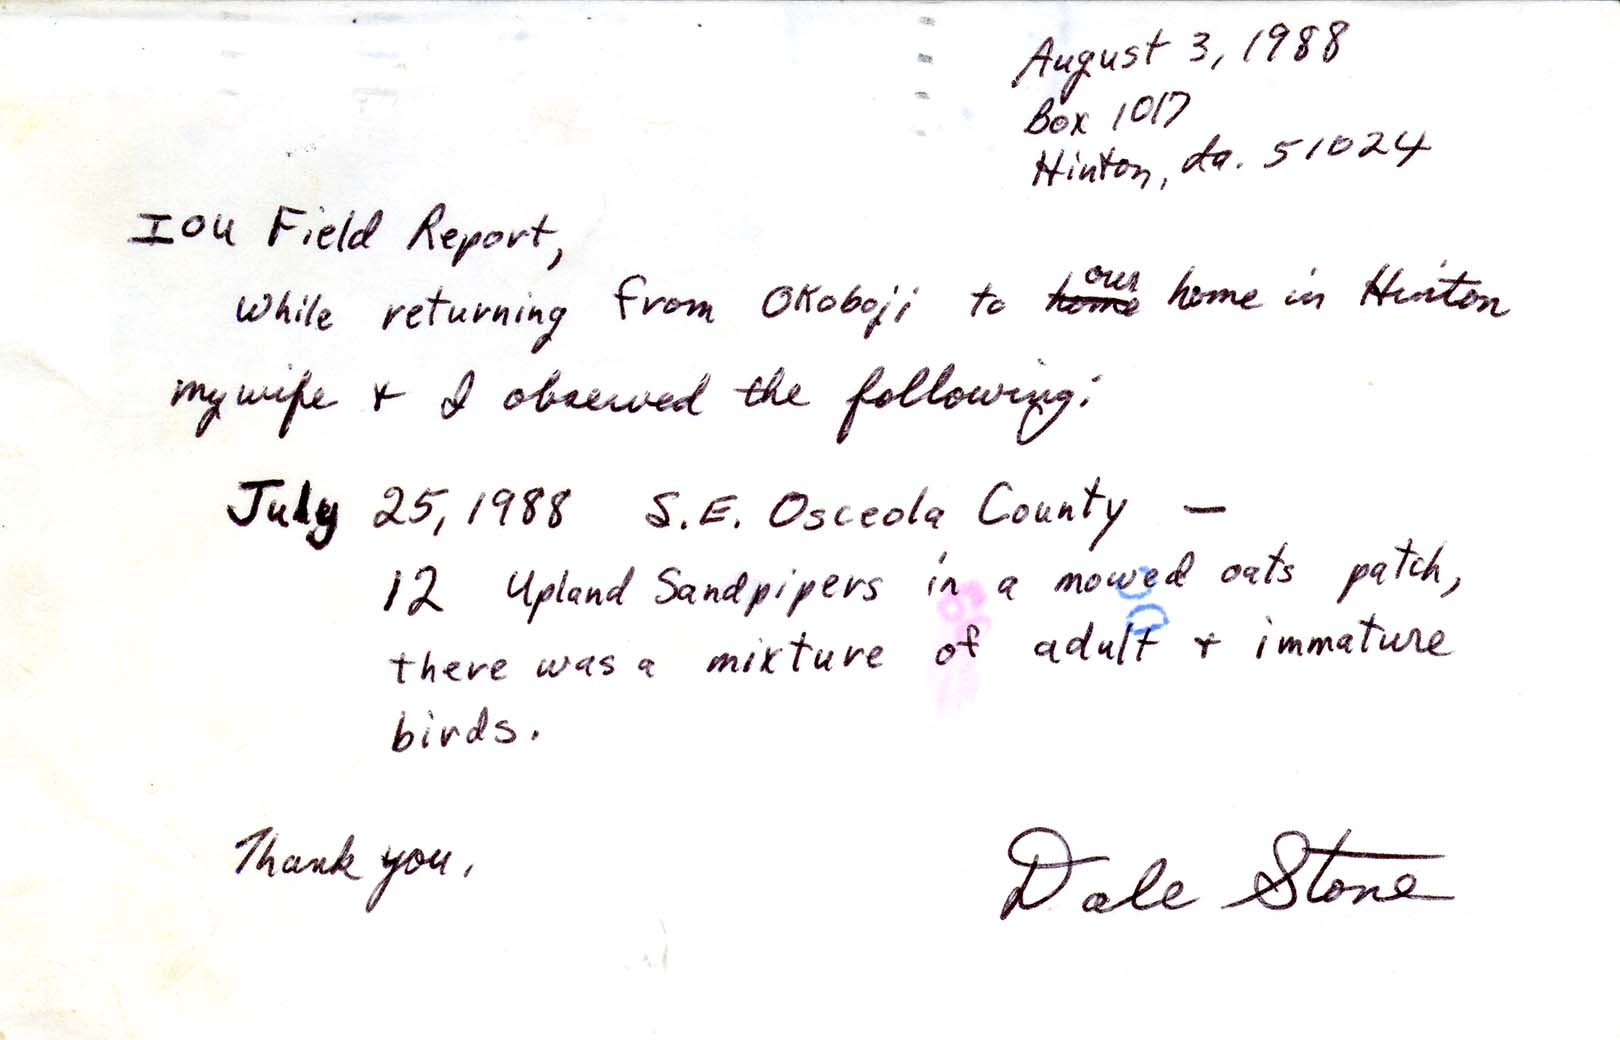 Dale Stone letter to James J. Dinsmore regarding Upland Sandpiper sightings, August 3, 1988